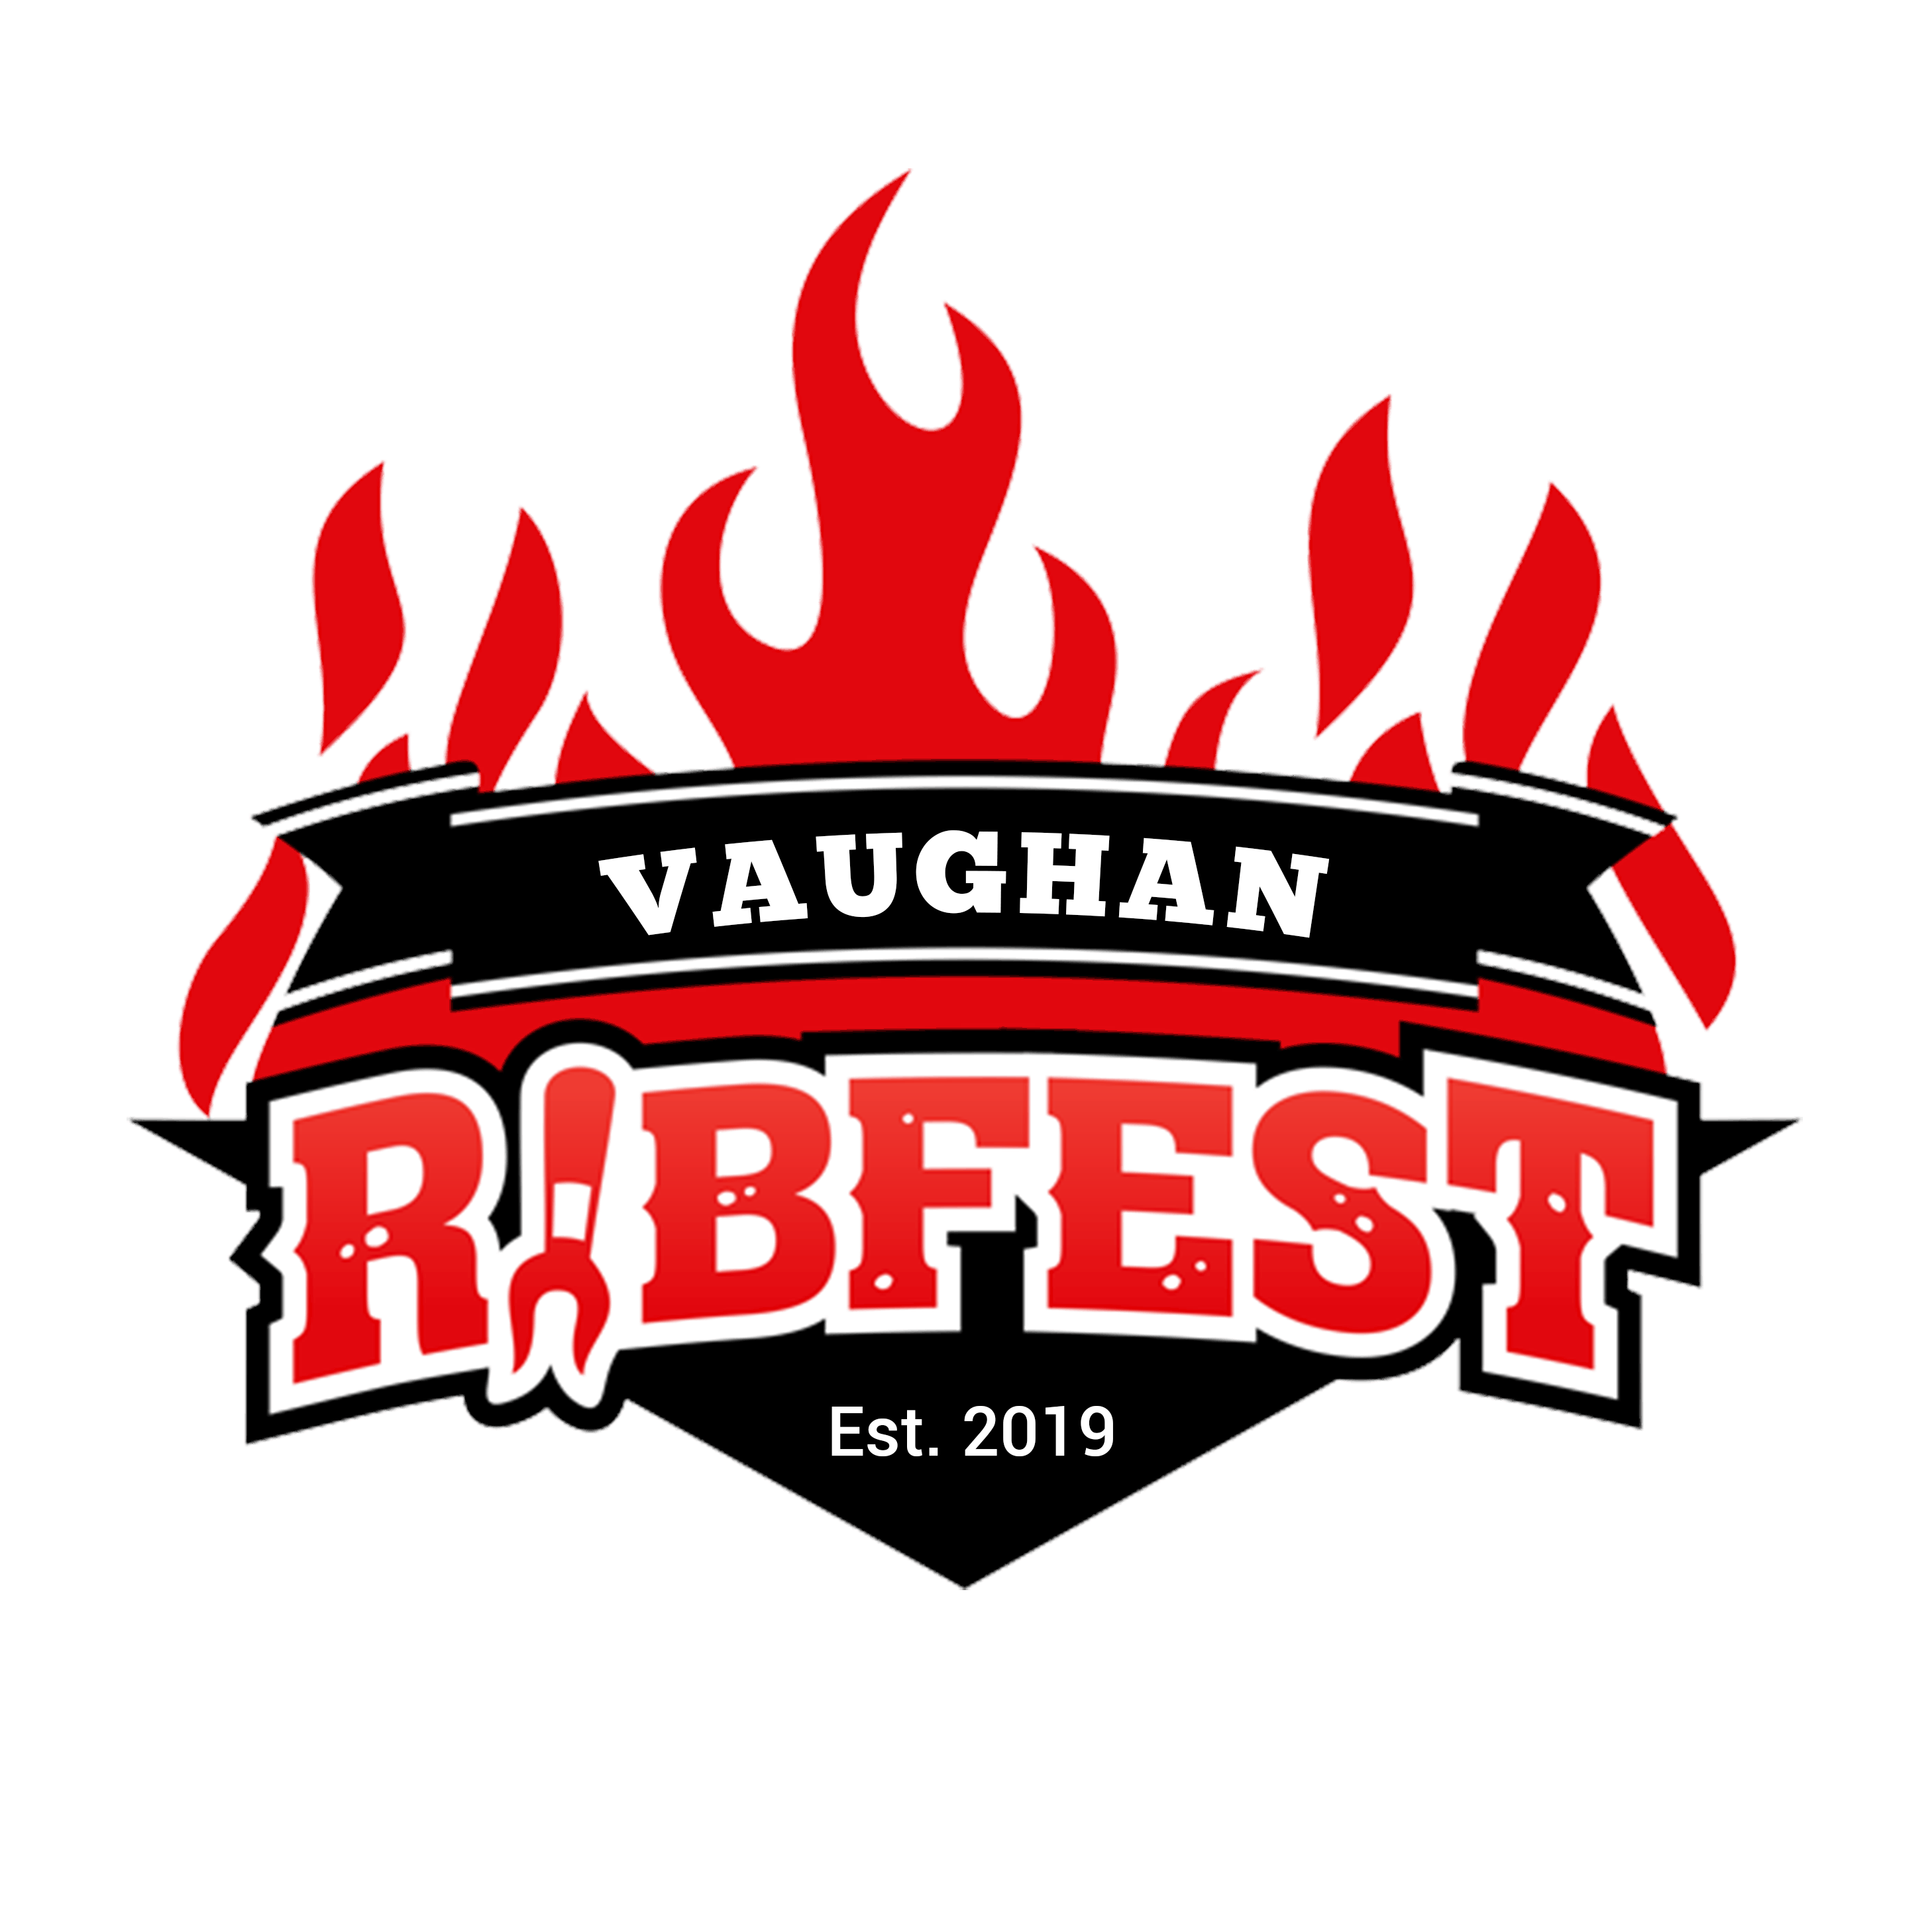 Vaughan<br>Ribfest